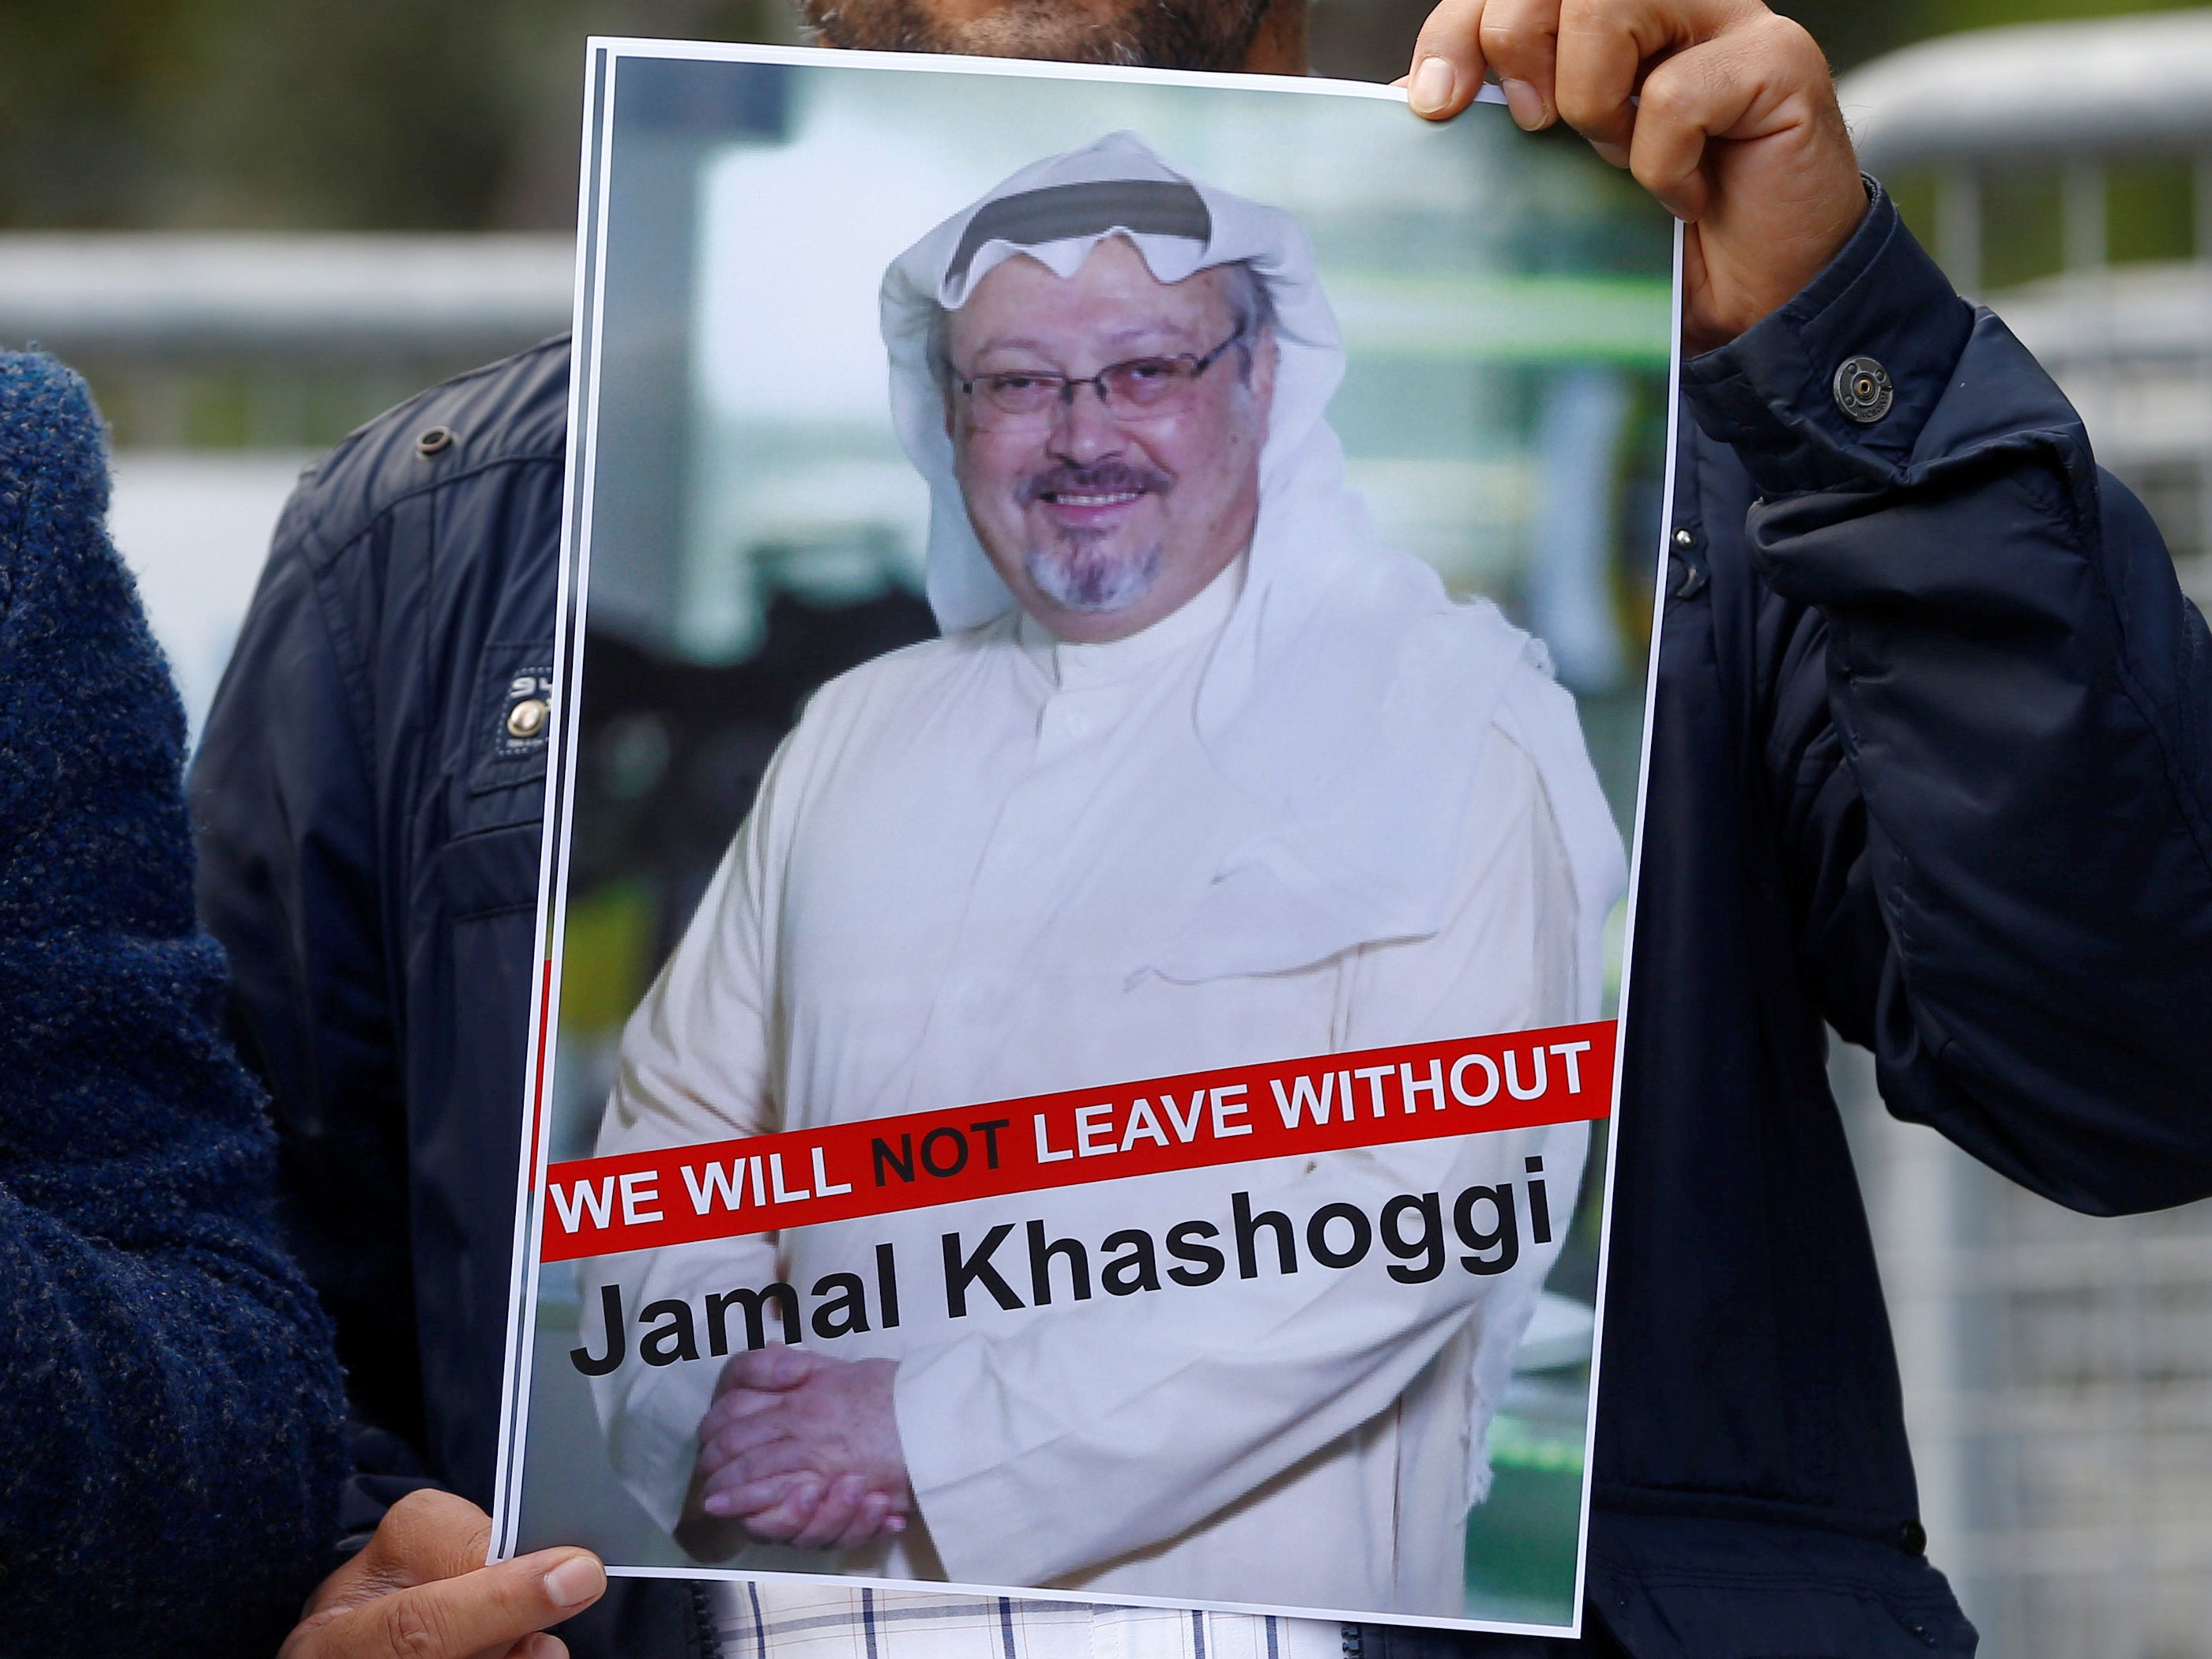 Turkish officials suspect Washington Post journalist Jamal Khashoggi 'killed' at Saudi consulate